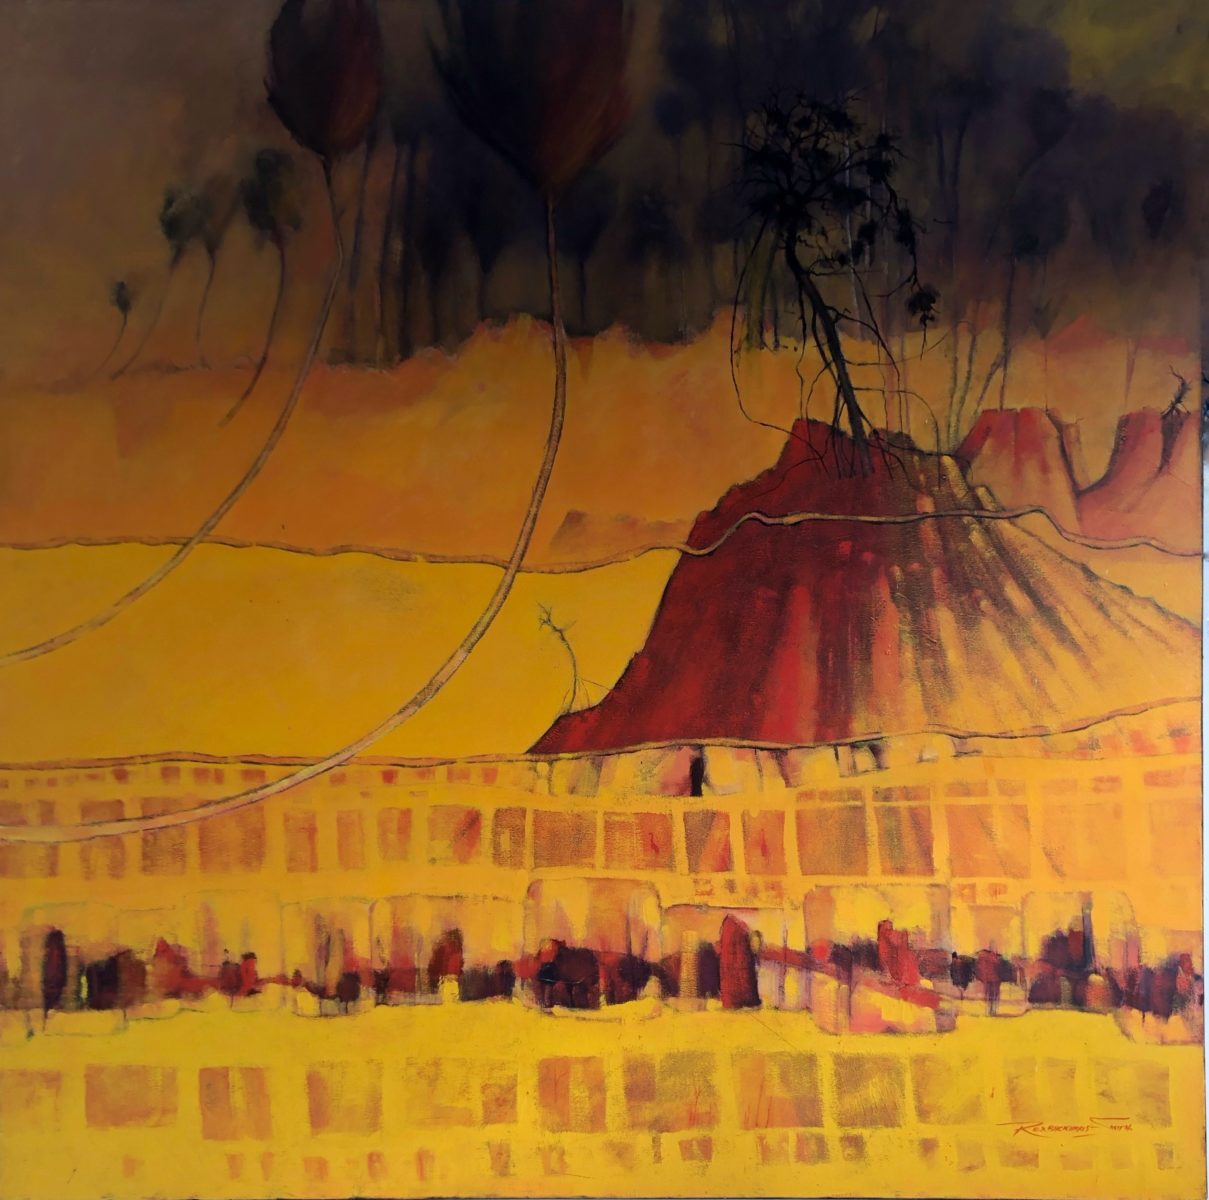 Dust in th Morning Lake Mungo | Rex Backhaus-Smith | Acrylic on canvas | 152.5 x 152.5 cm | $15,000